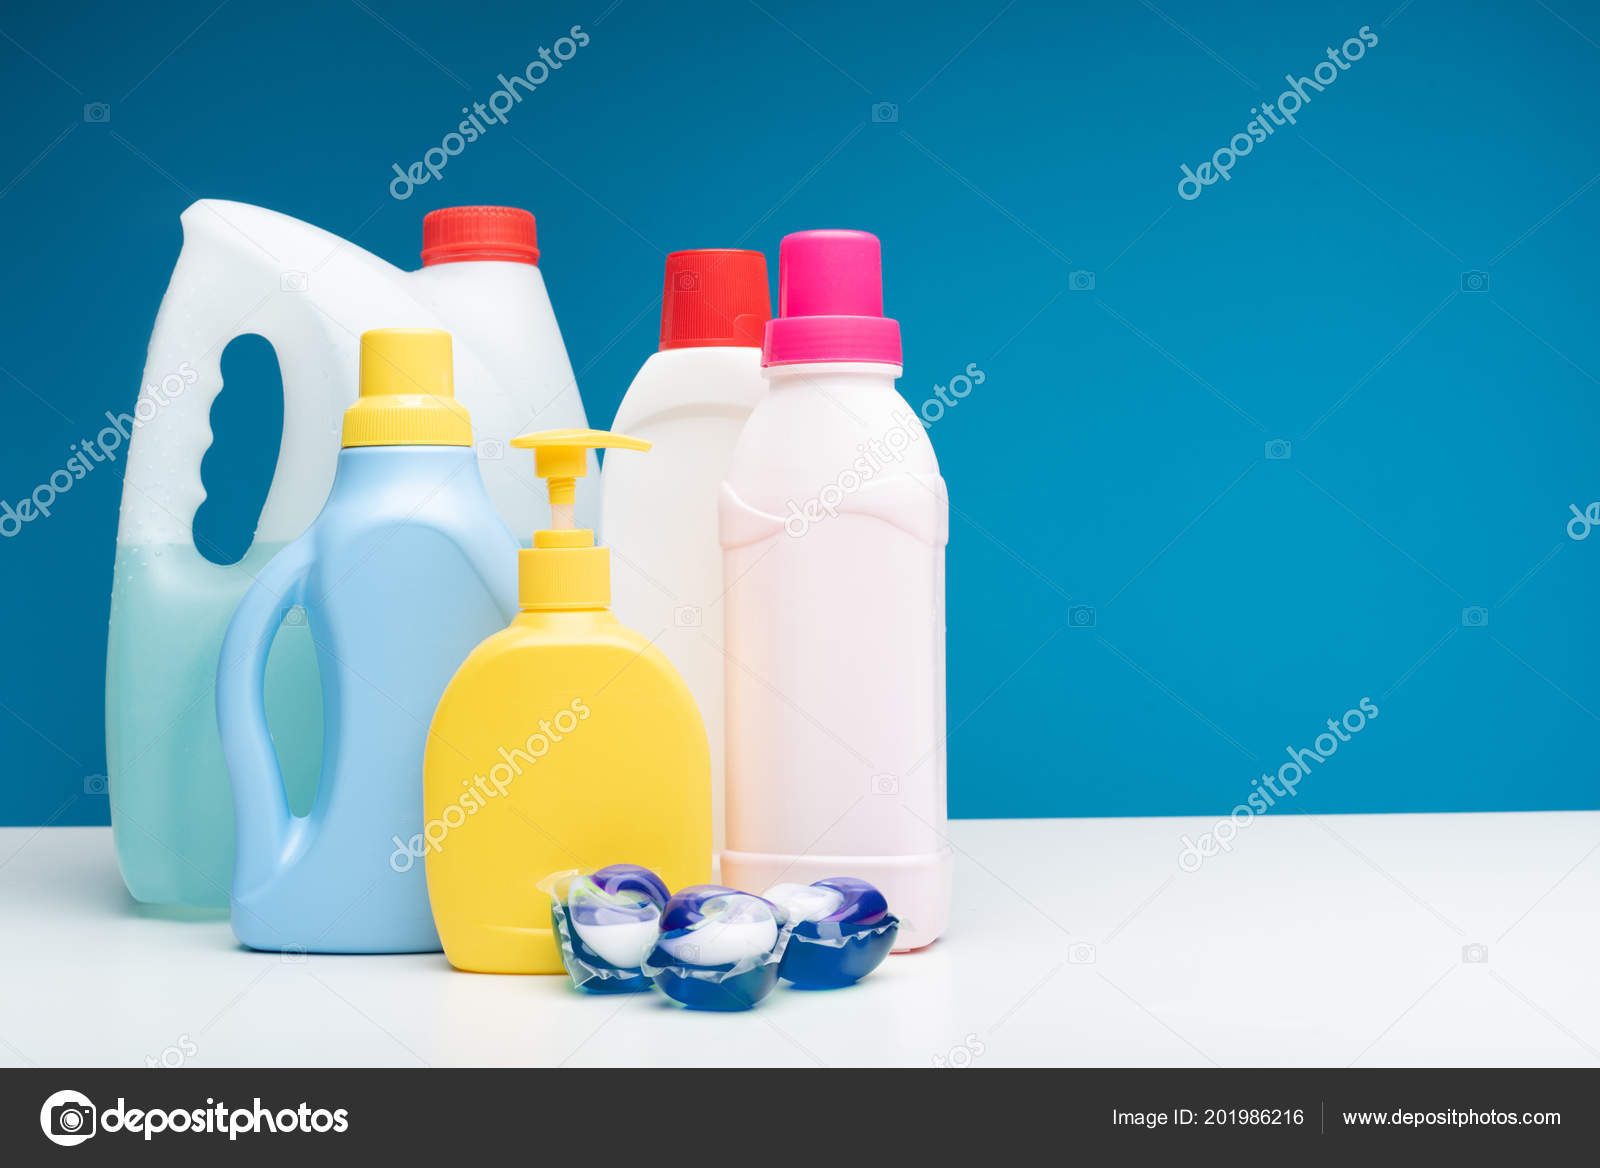 depositphotos 201986216 stock photo various detergents put on white